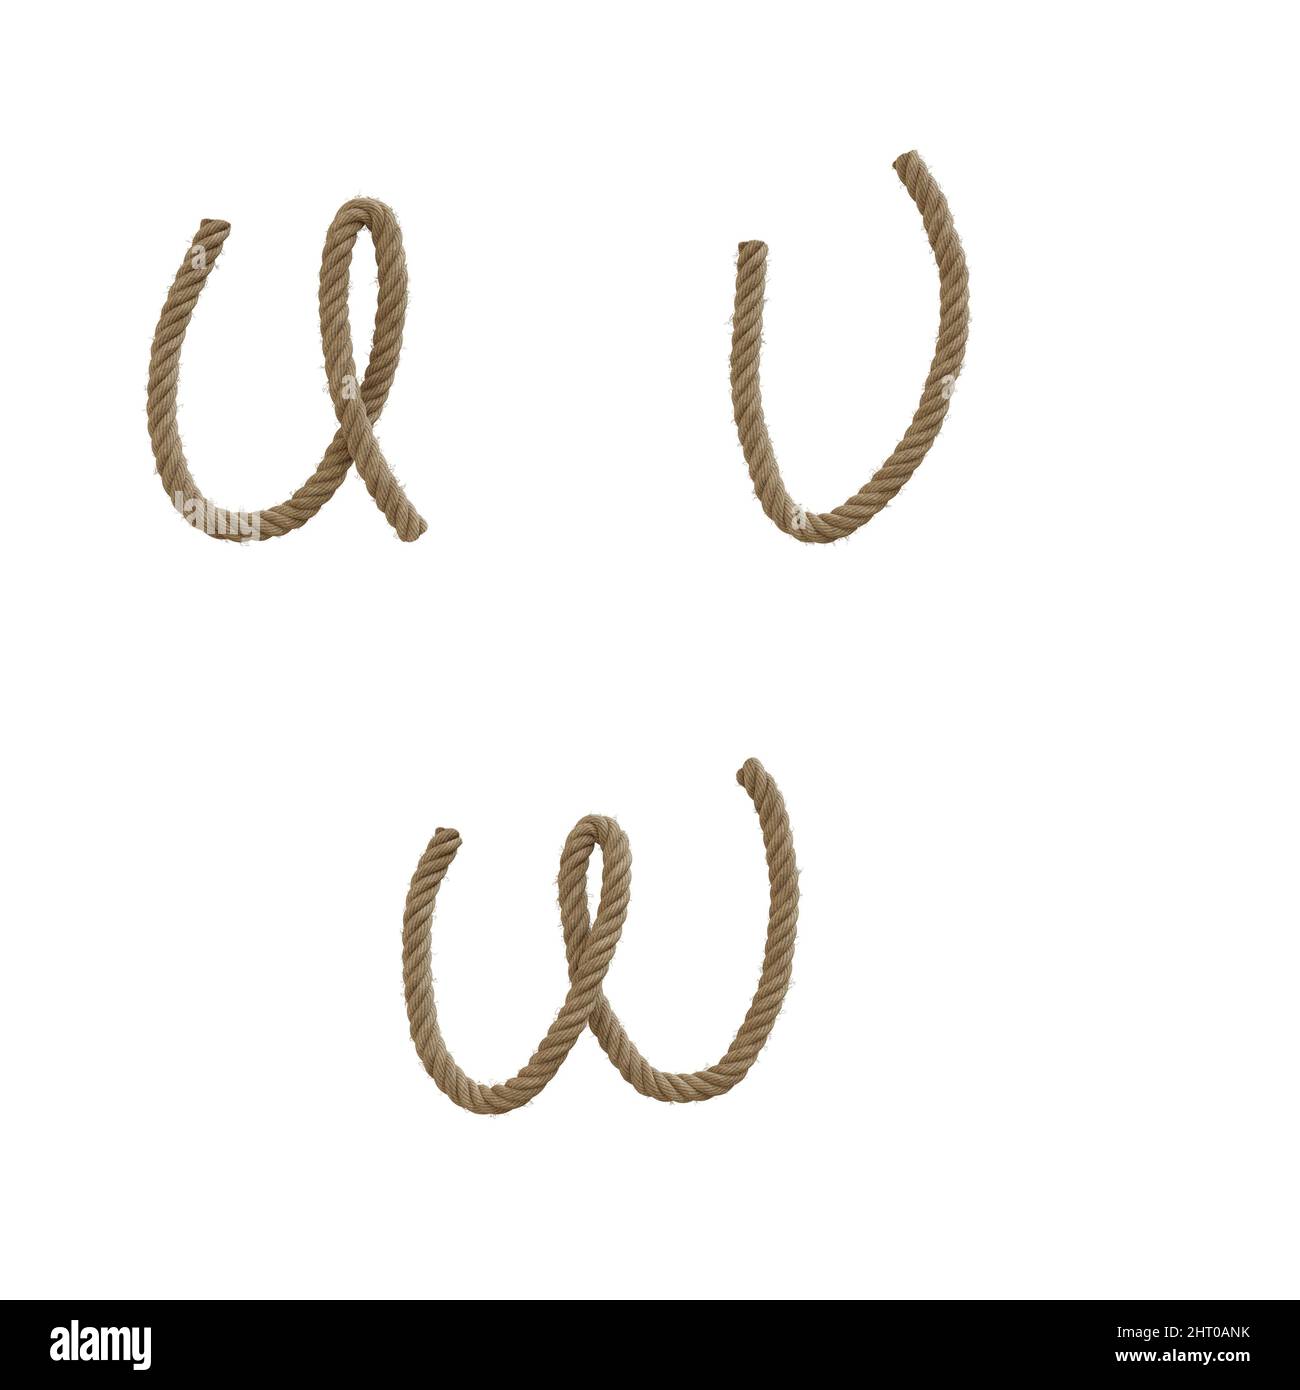 3D rendering of hemp rope lower case letters alphabet - letters u-w Stock Photo